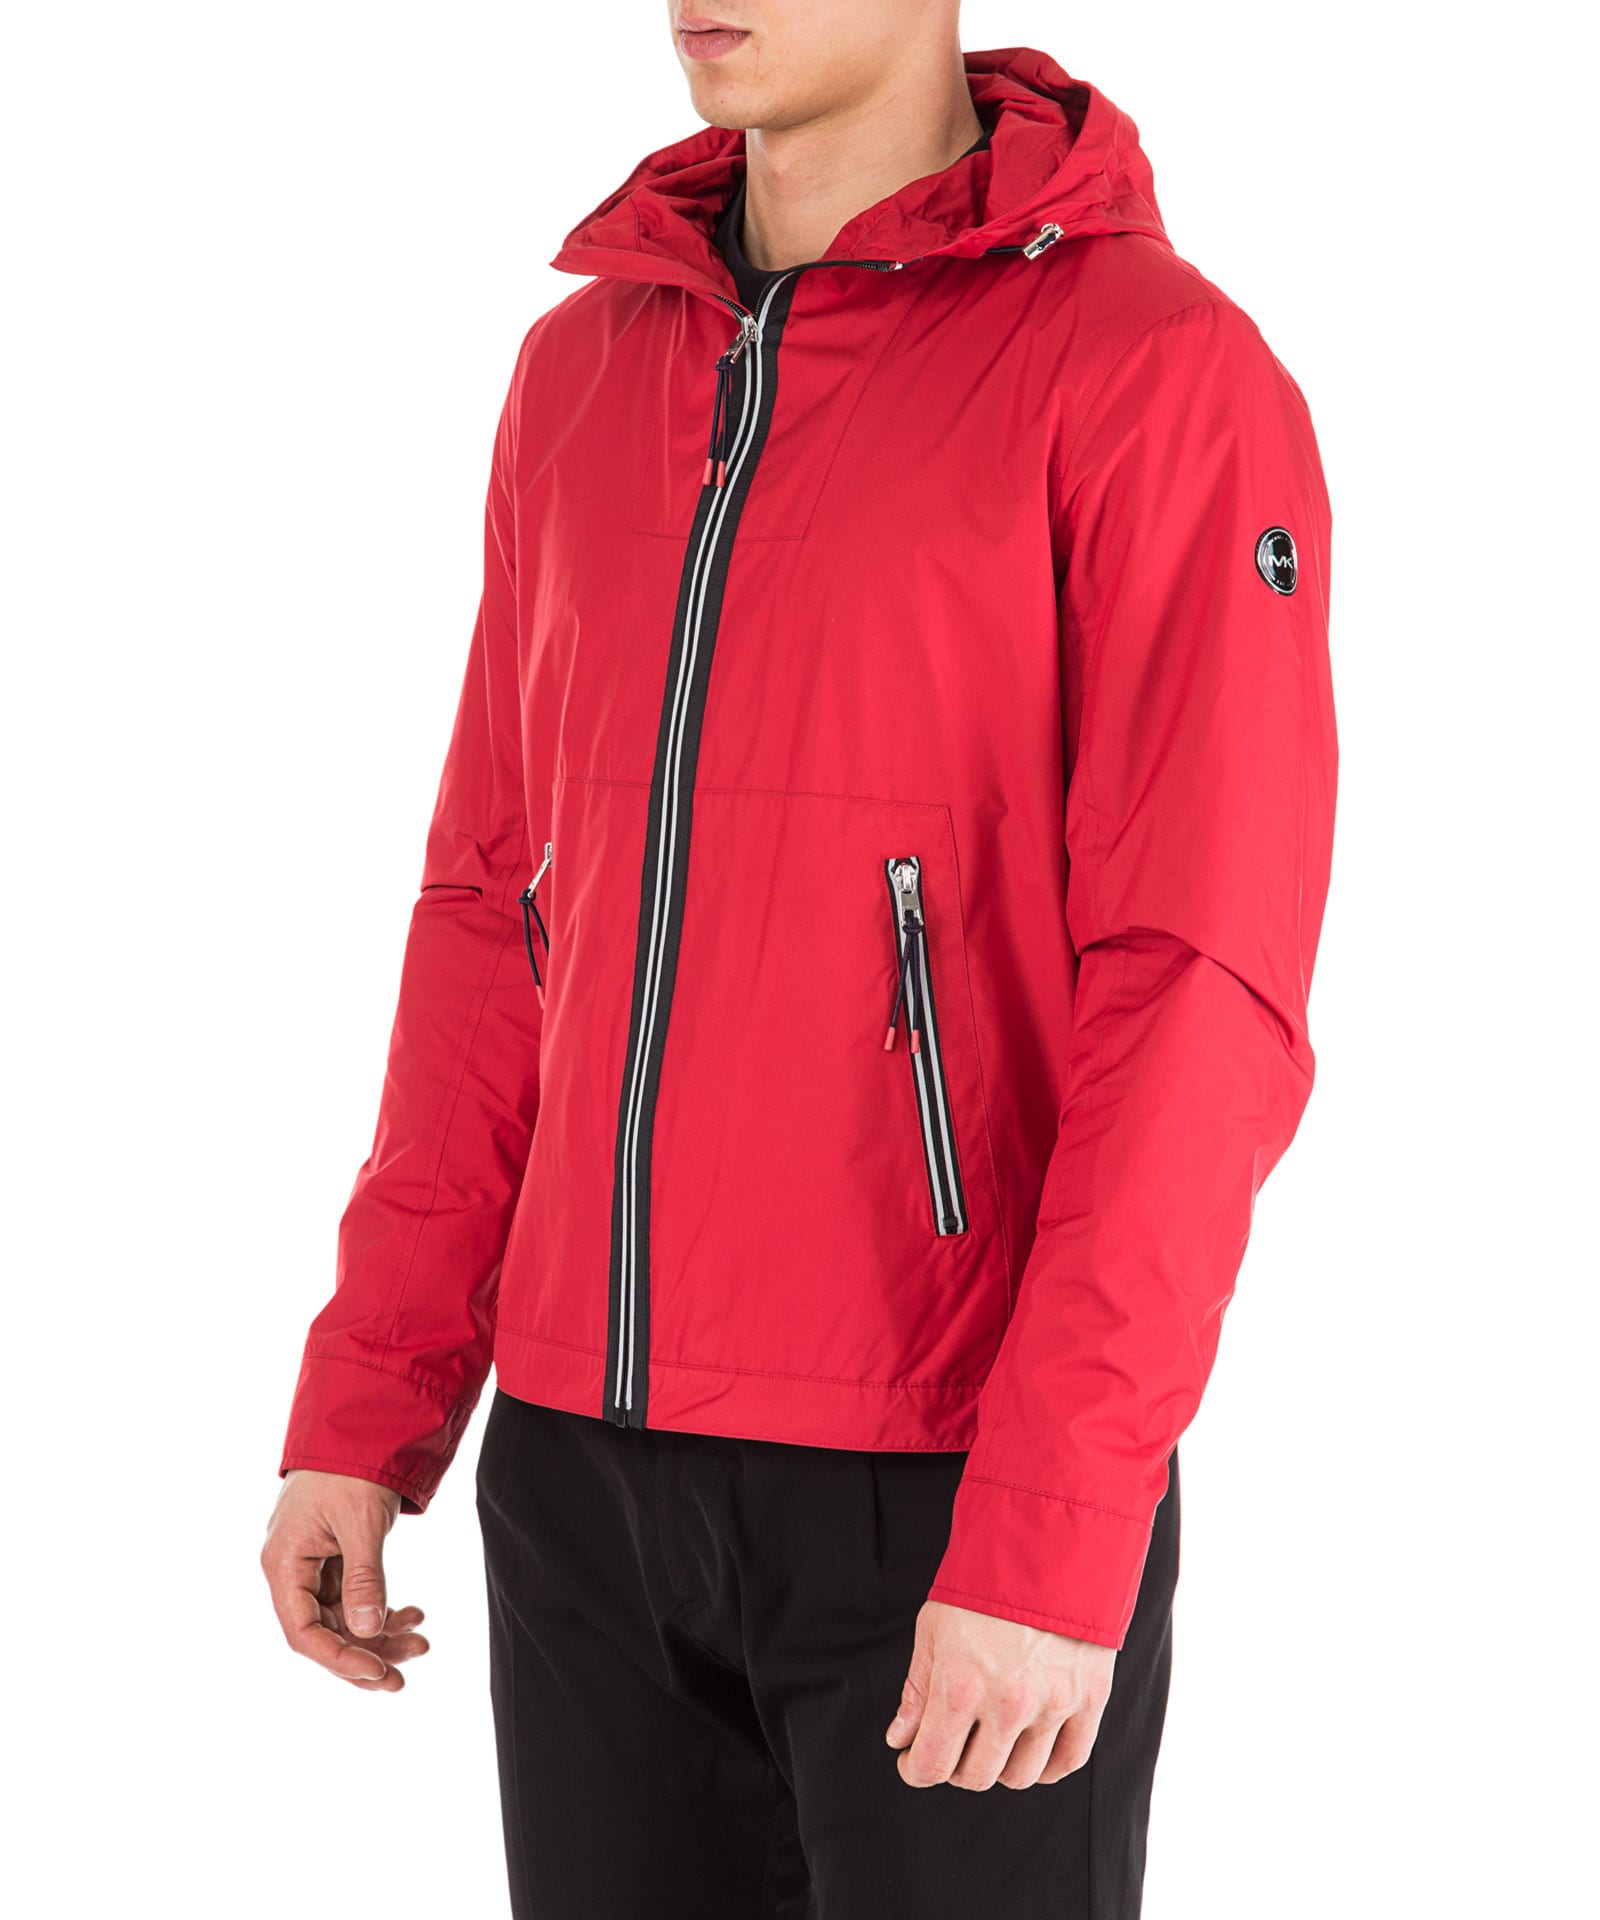 Michael Kors Men's Outerwear Jacket Blouson In Red | ModeSens